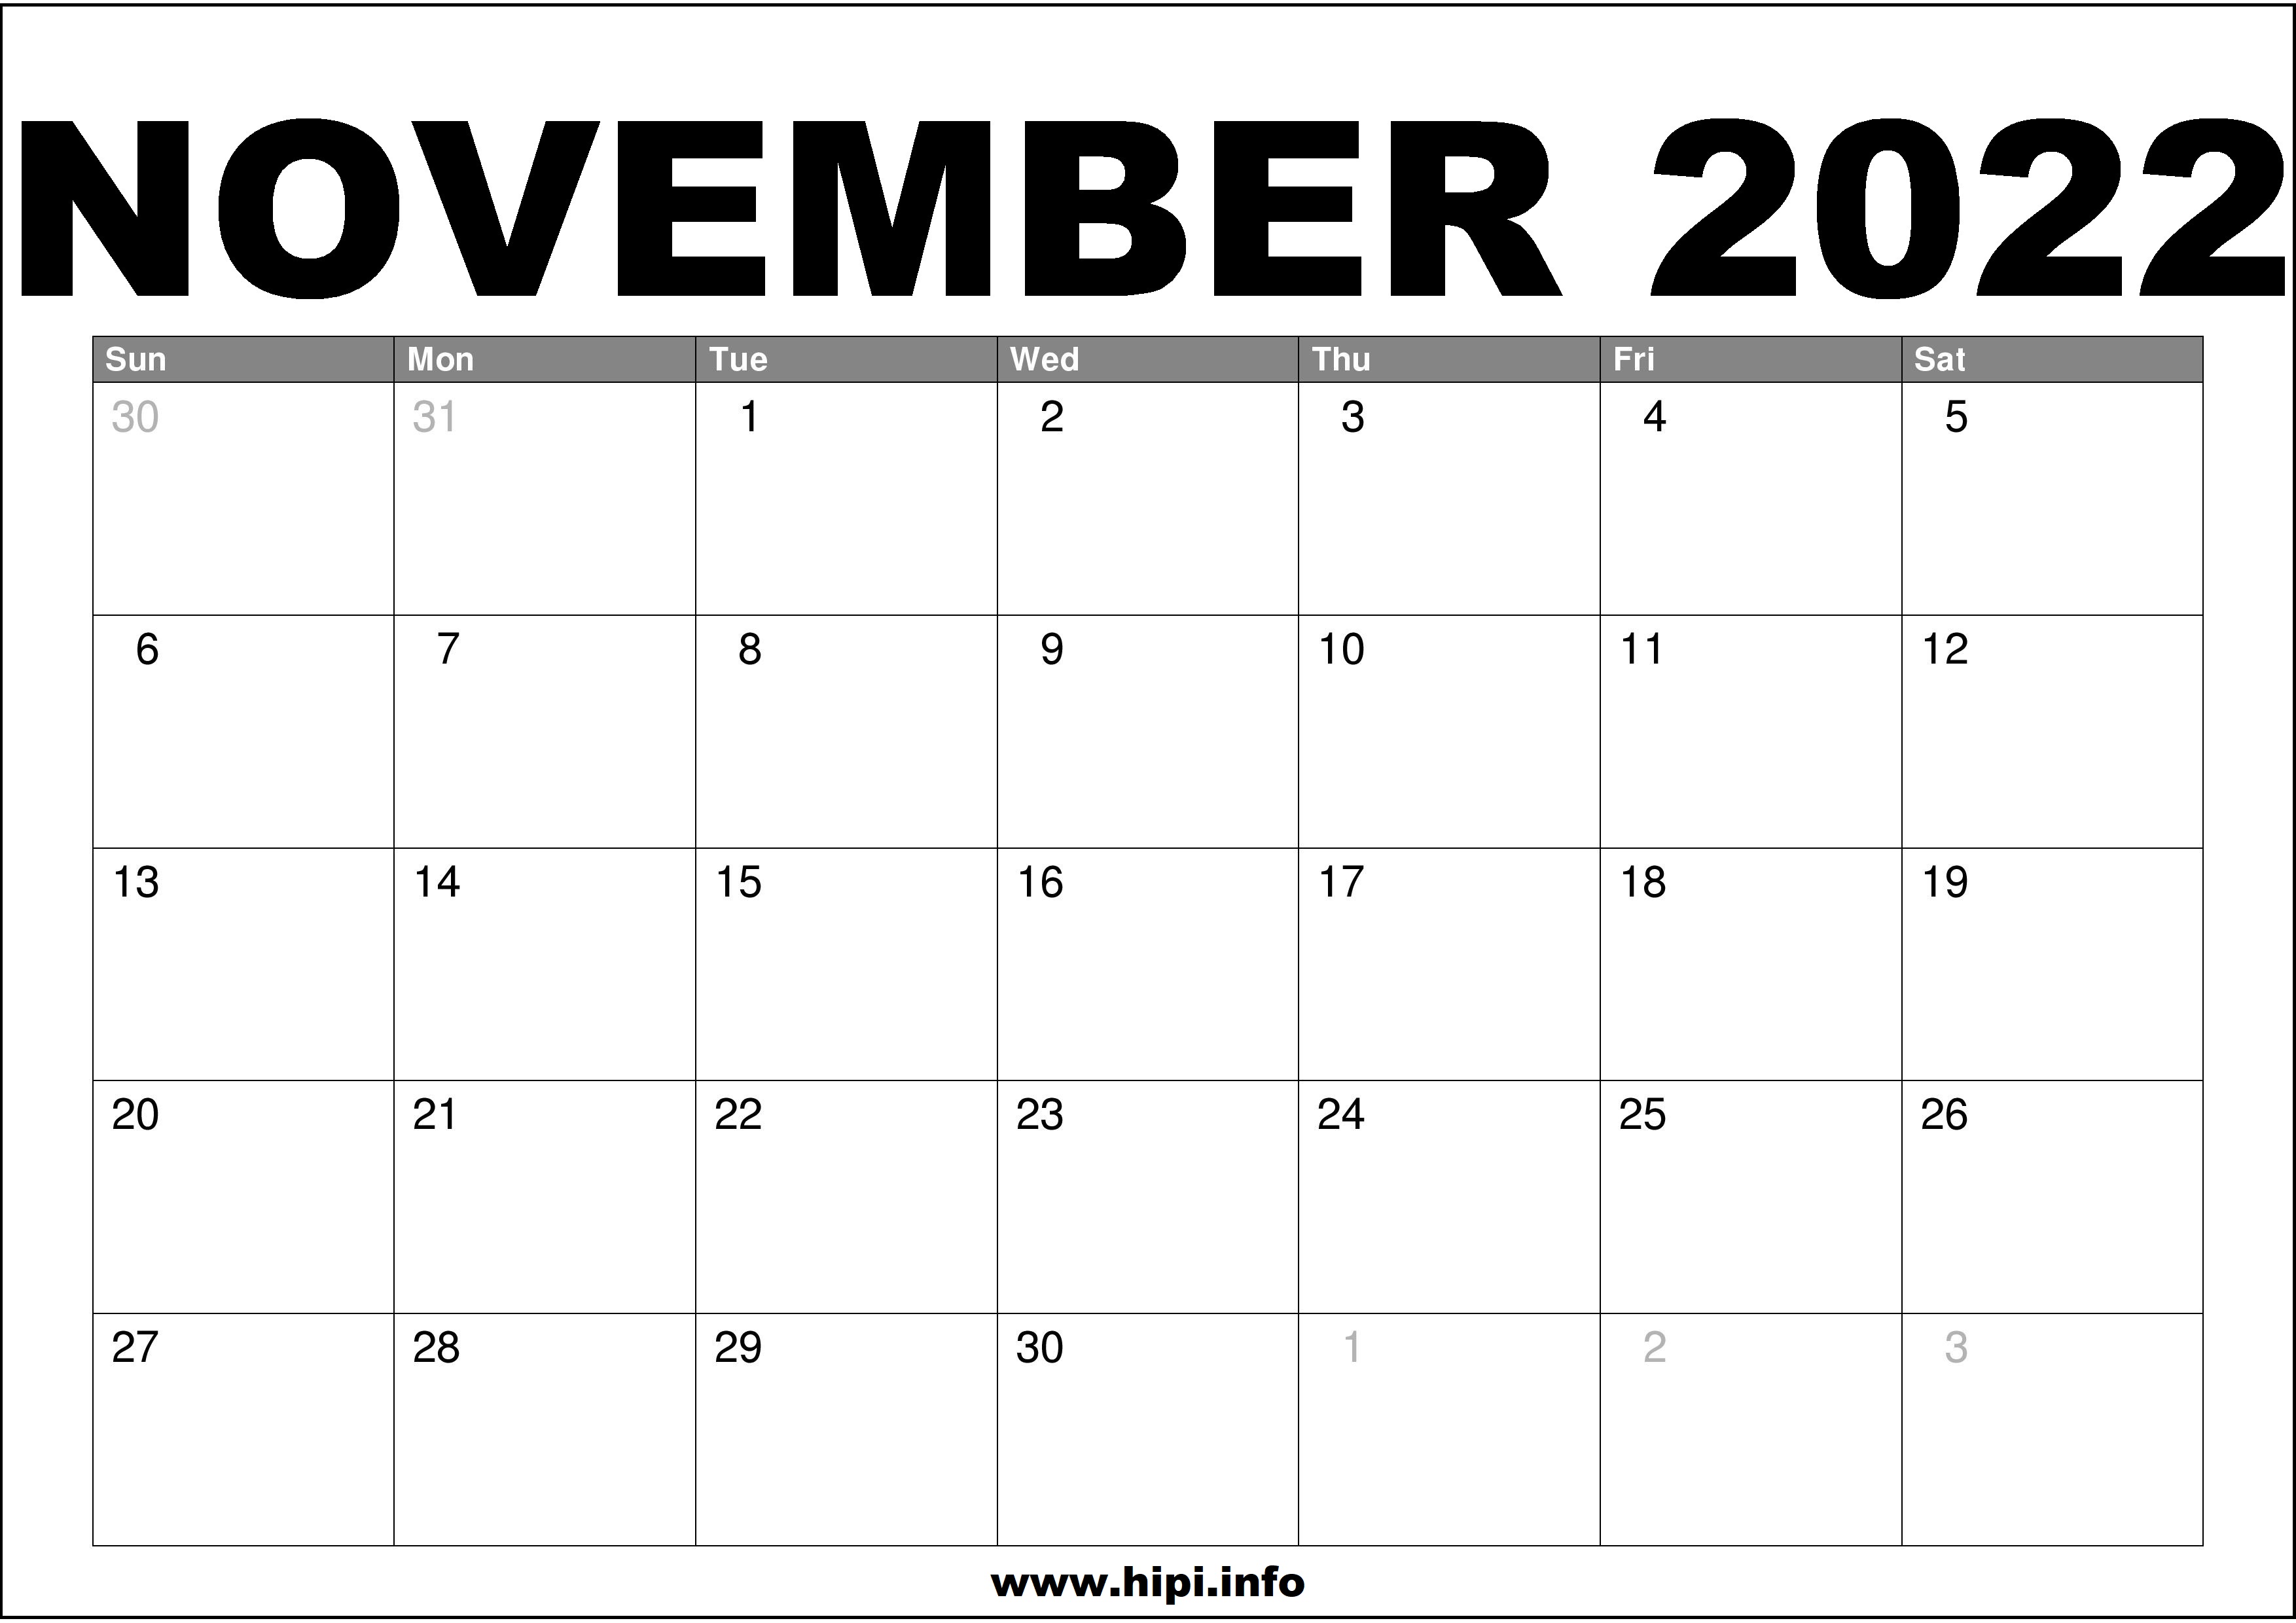 Monthly Calendar November 2022 November 2022 Calendar Printable Free - Hipi.info | Calendars Printable Free